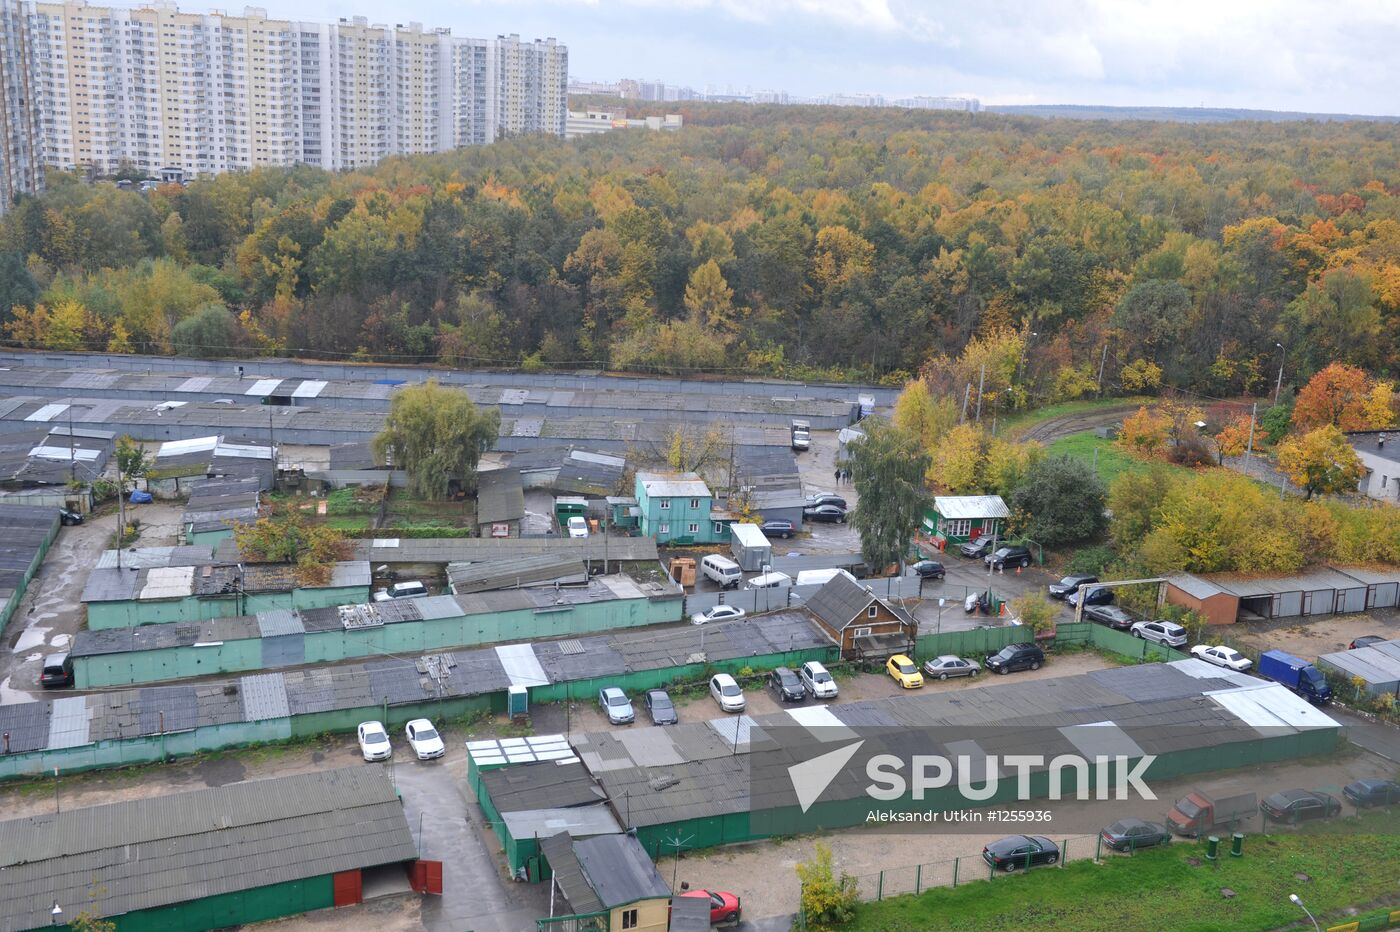 Parking garages near Bitsa Park in Moscow